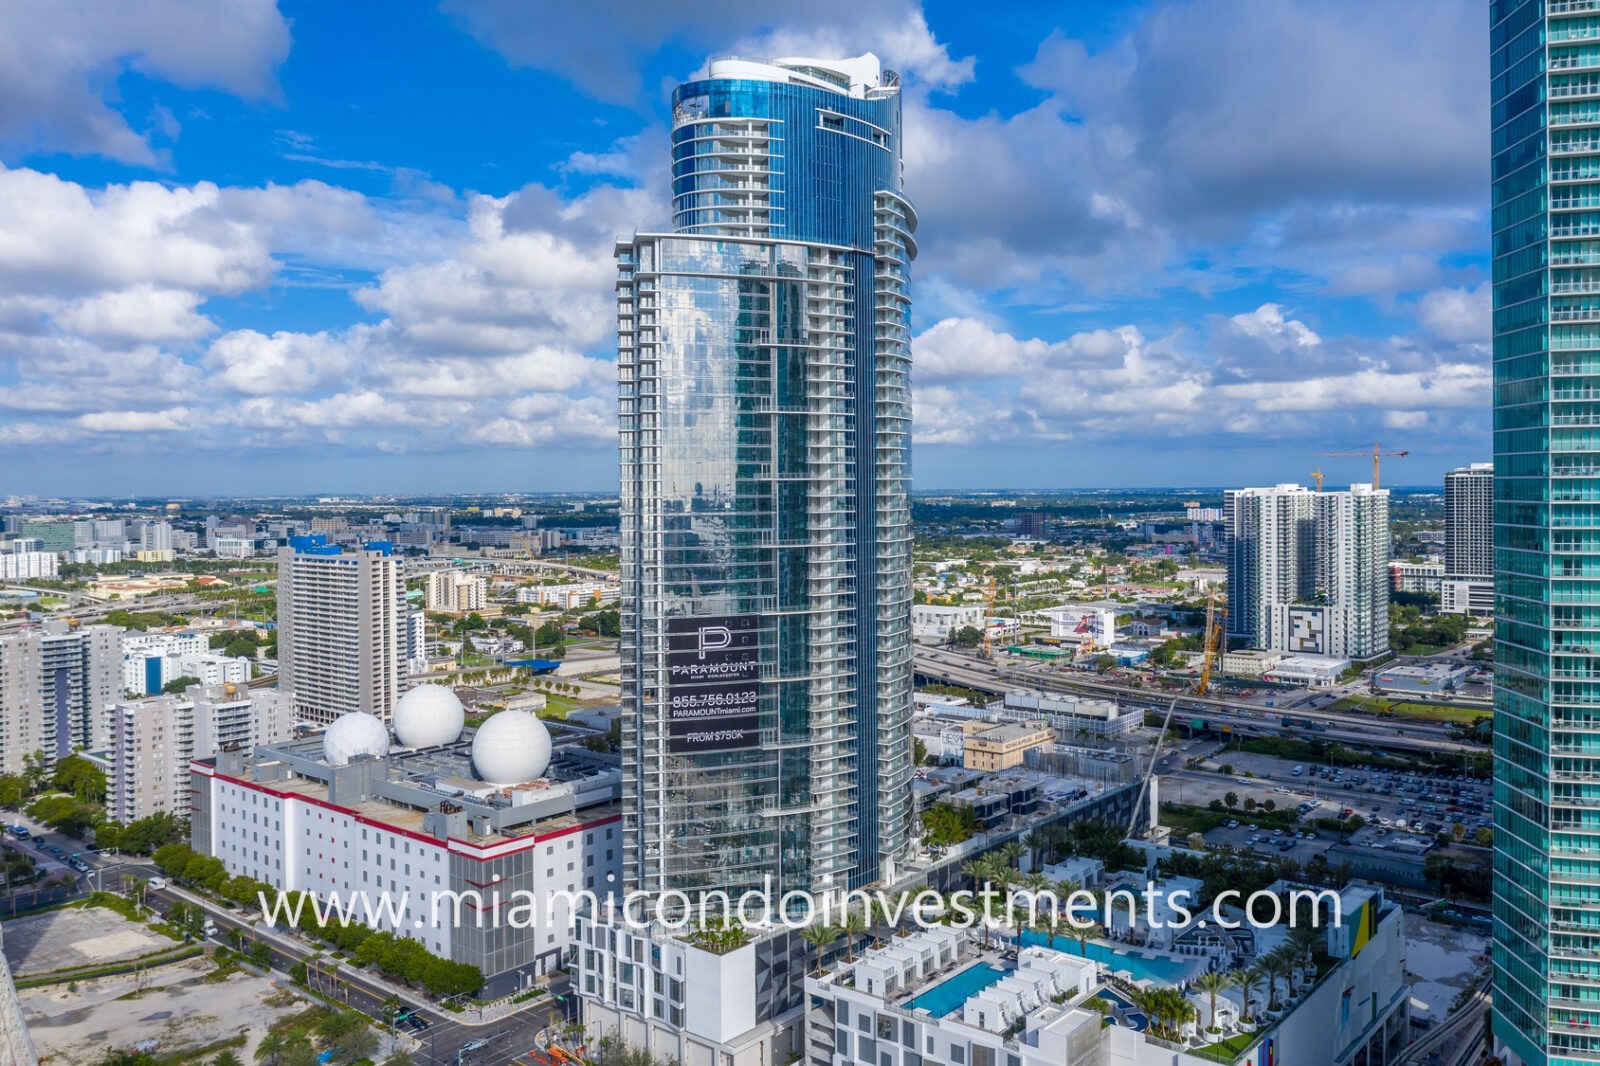 Paramount Miami Worldcenter aerial photo